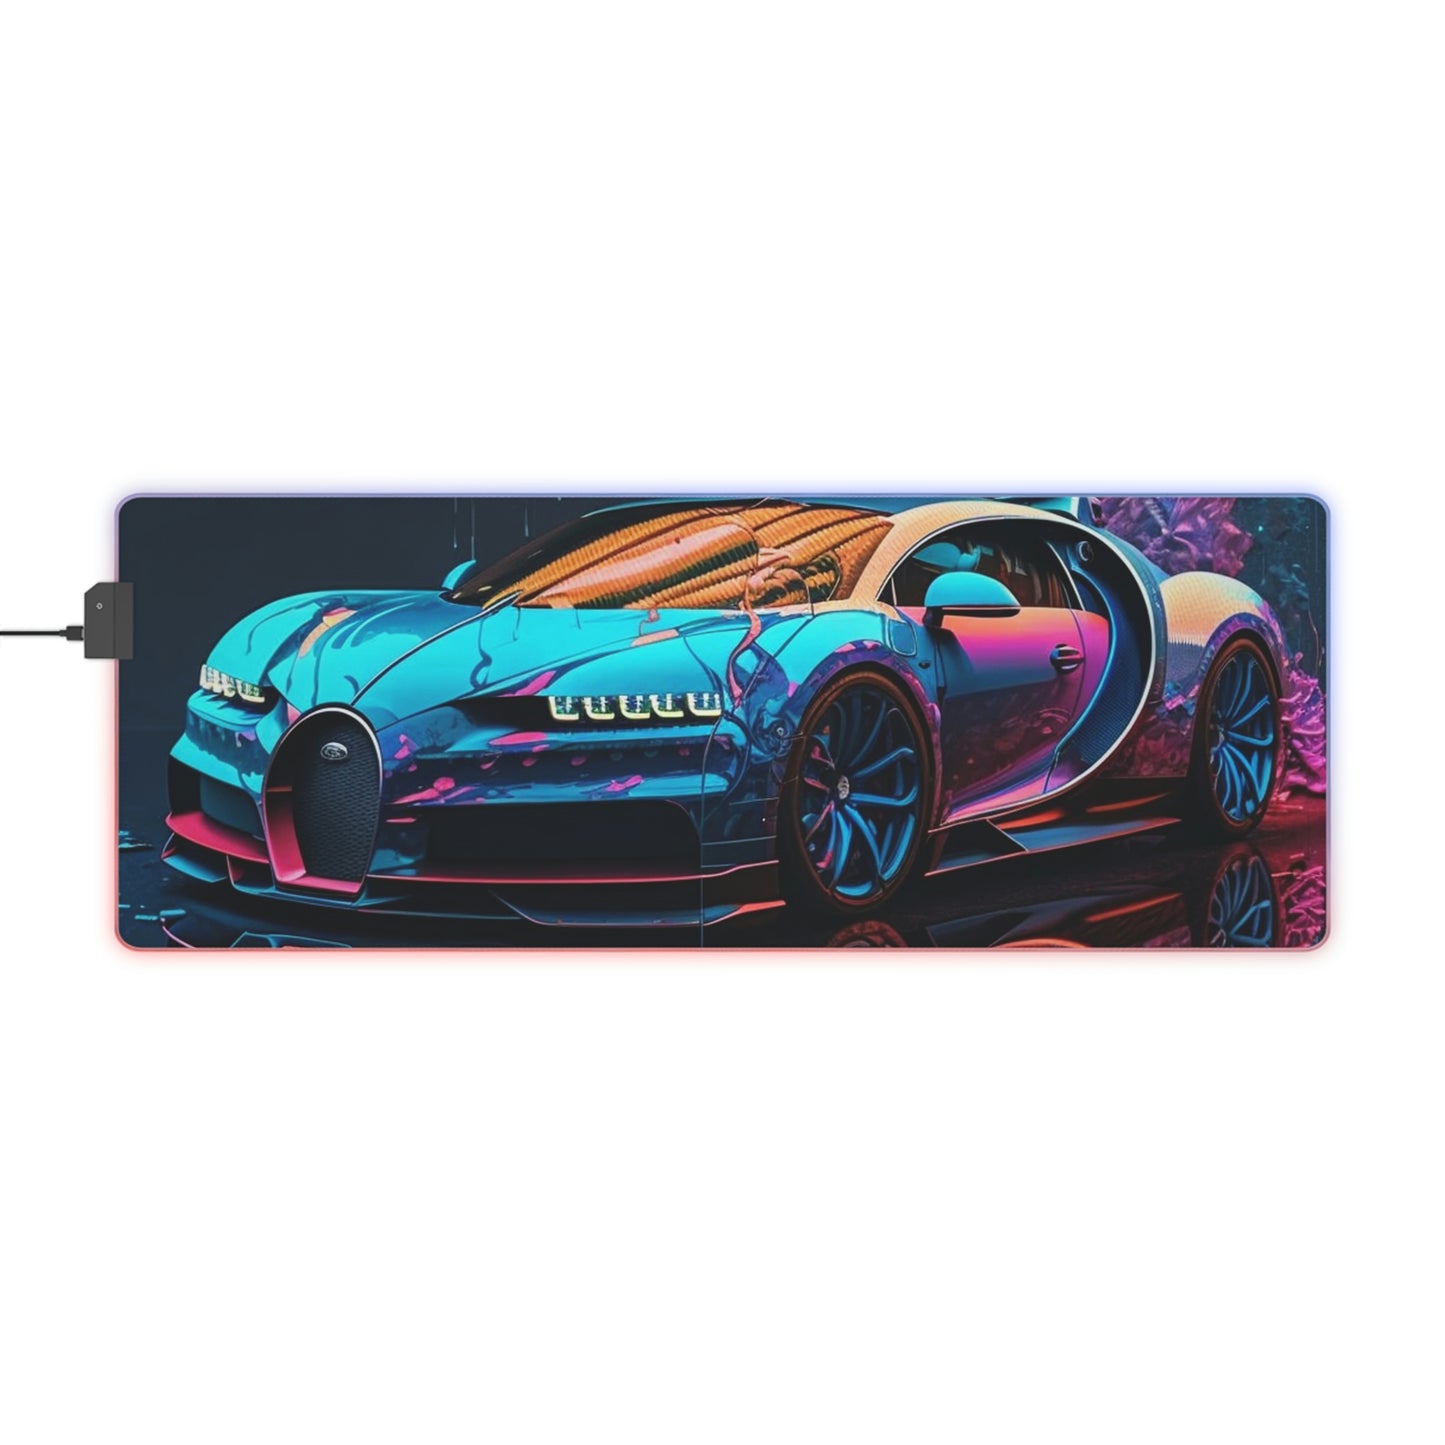 LED Gaming Mouse Pad Bugatti Neon Chiron Super 4